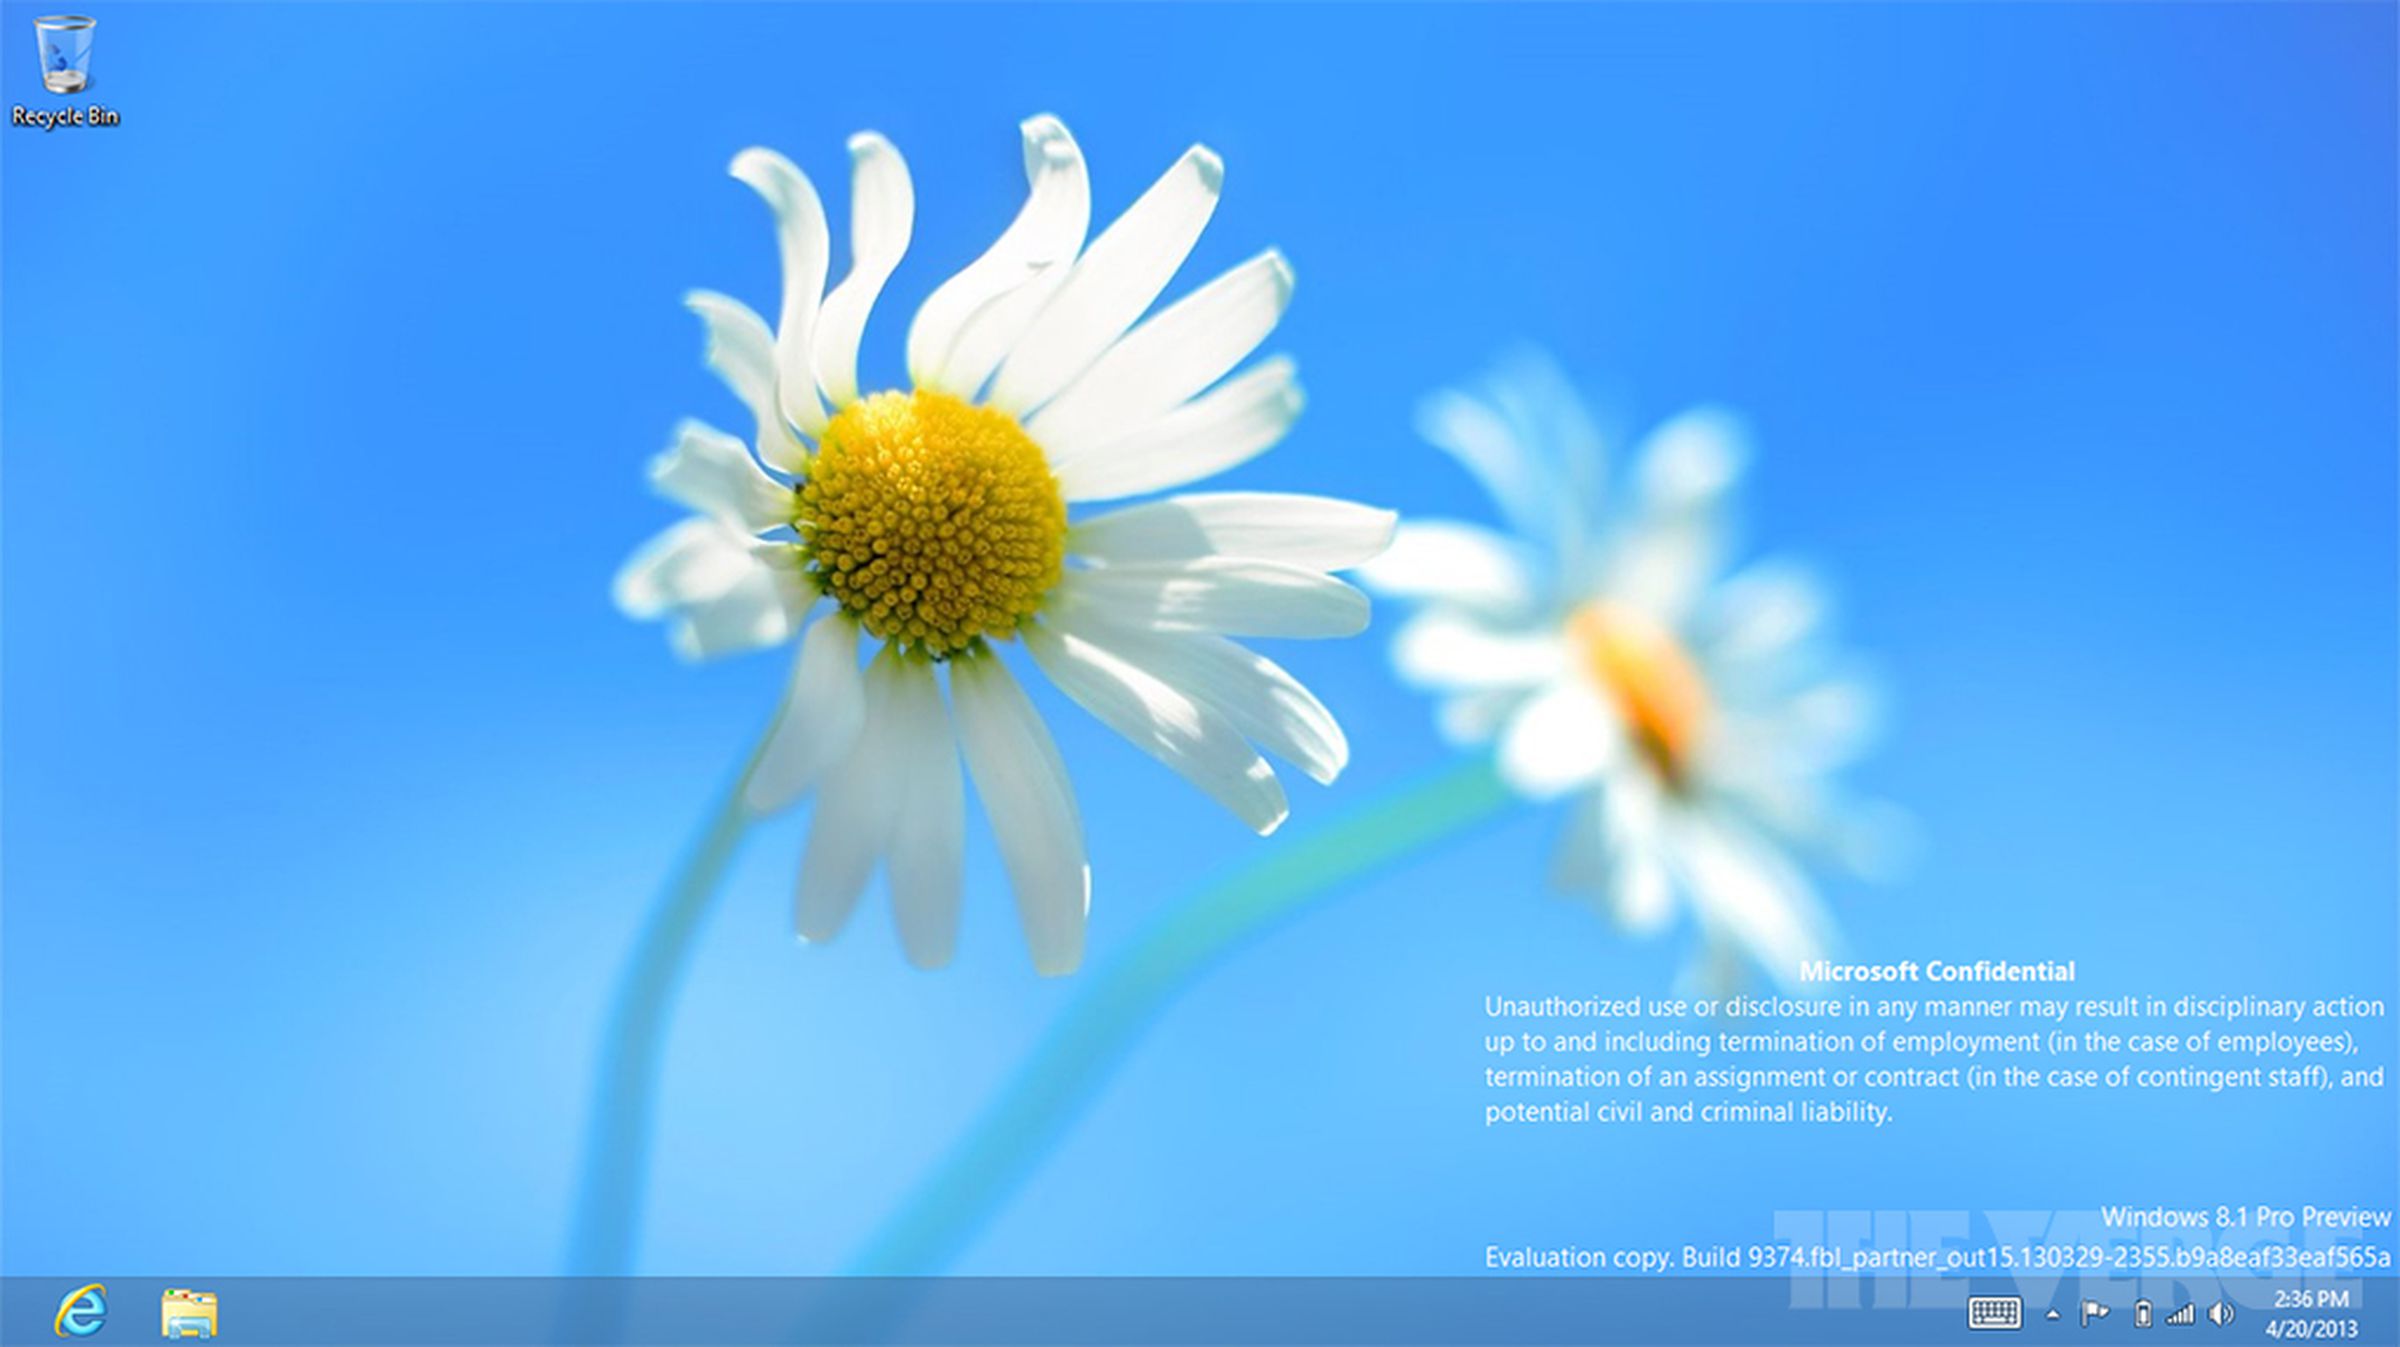 Windows 8.1 build 9374 screenshots